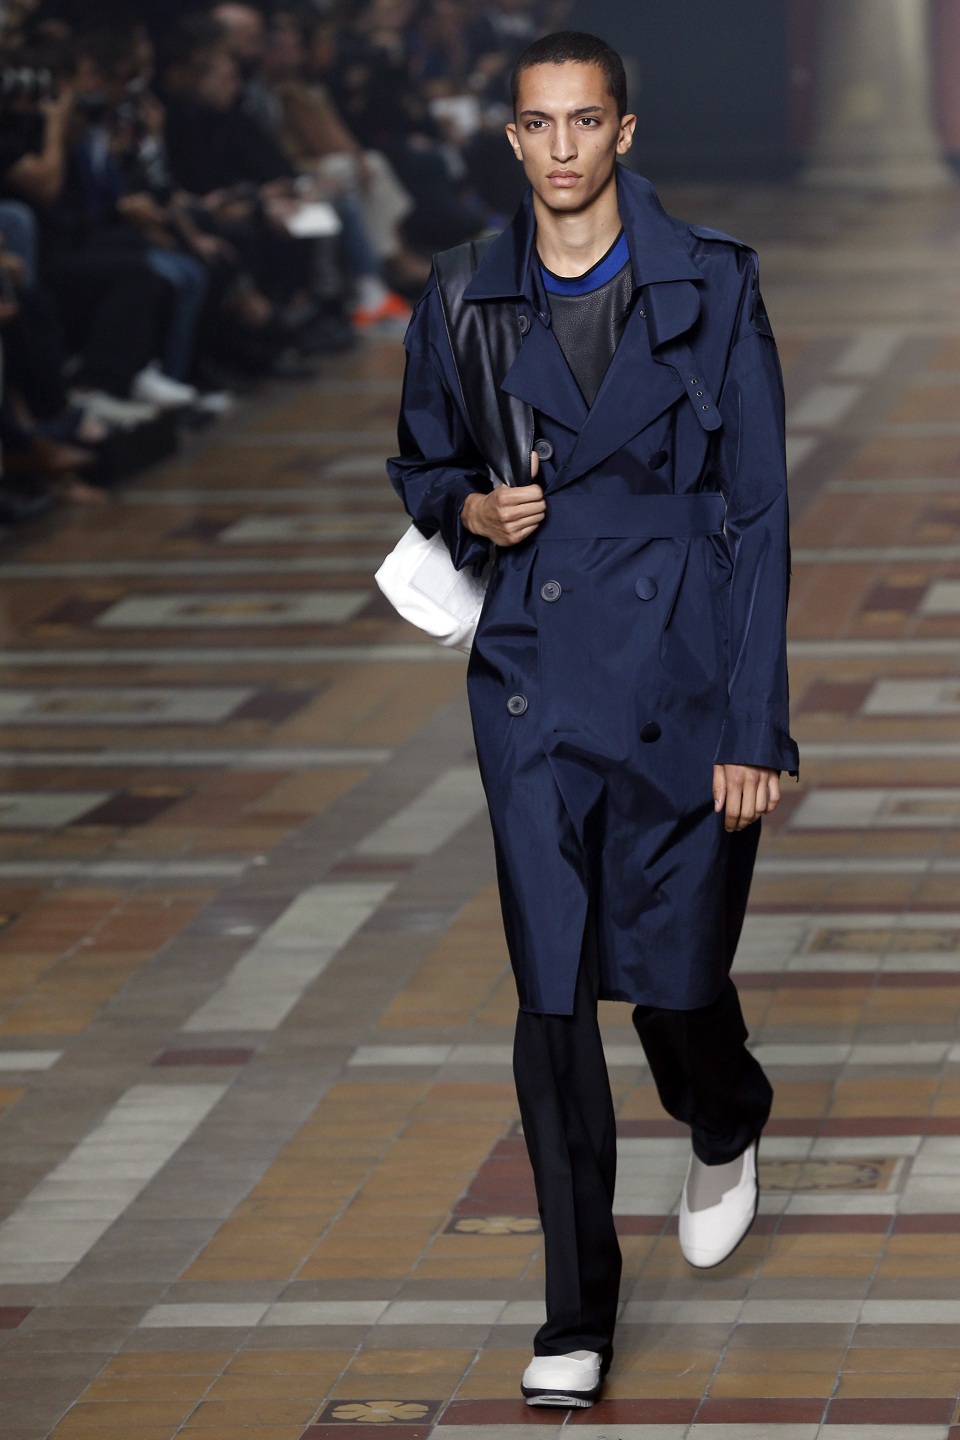 Lanvin’s new urban elegance wraps up Paris fashion | GMA News Online